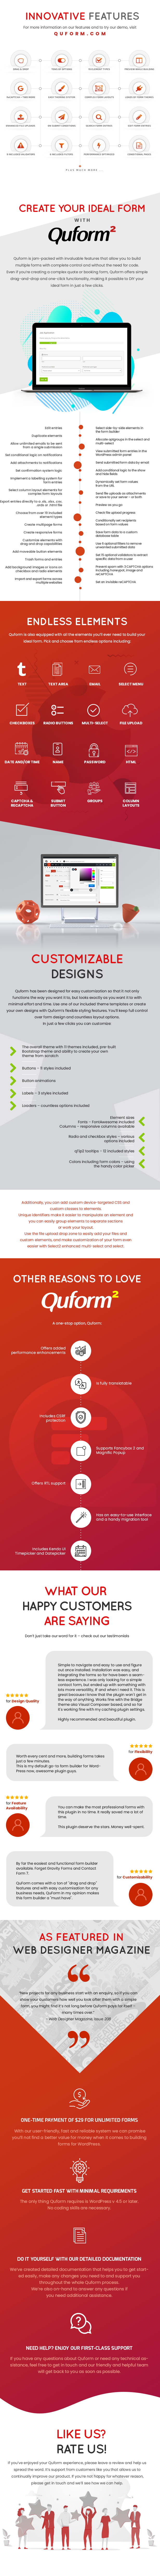 Lista de características de Quform 2